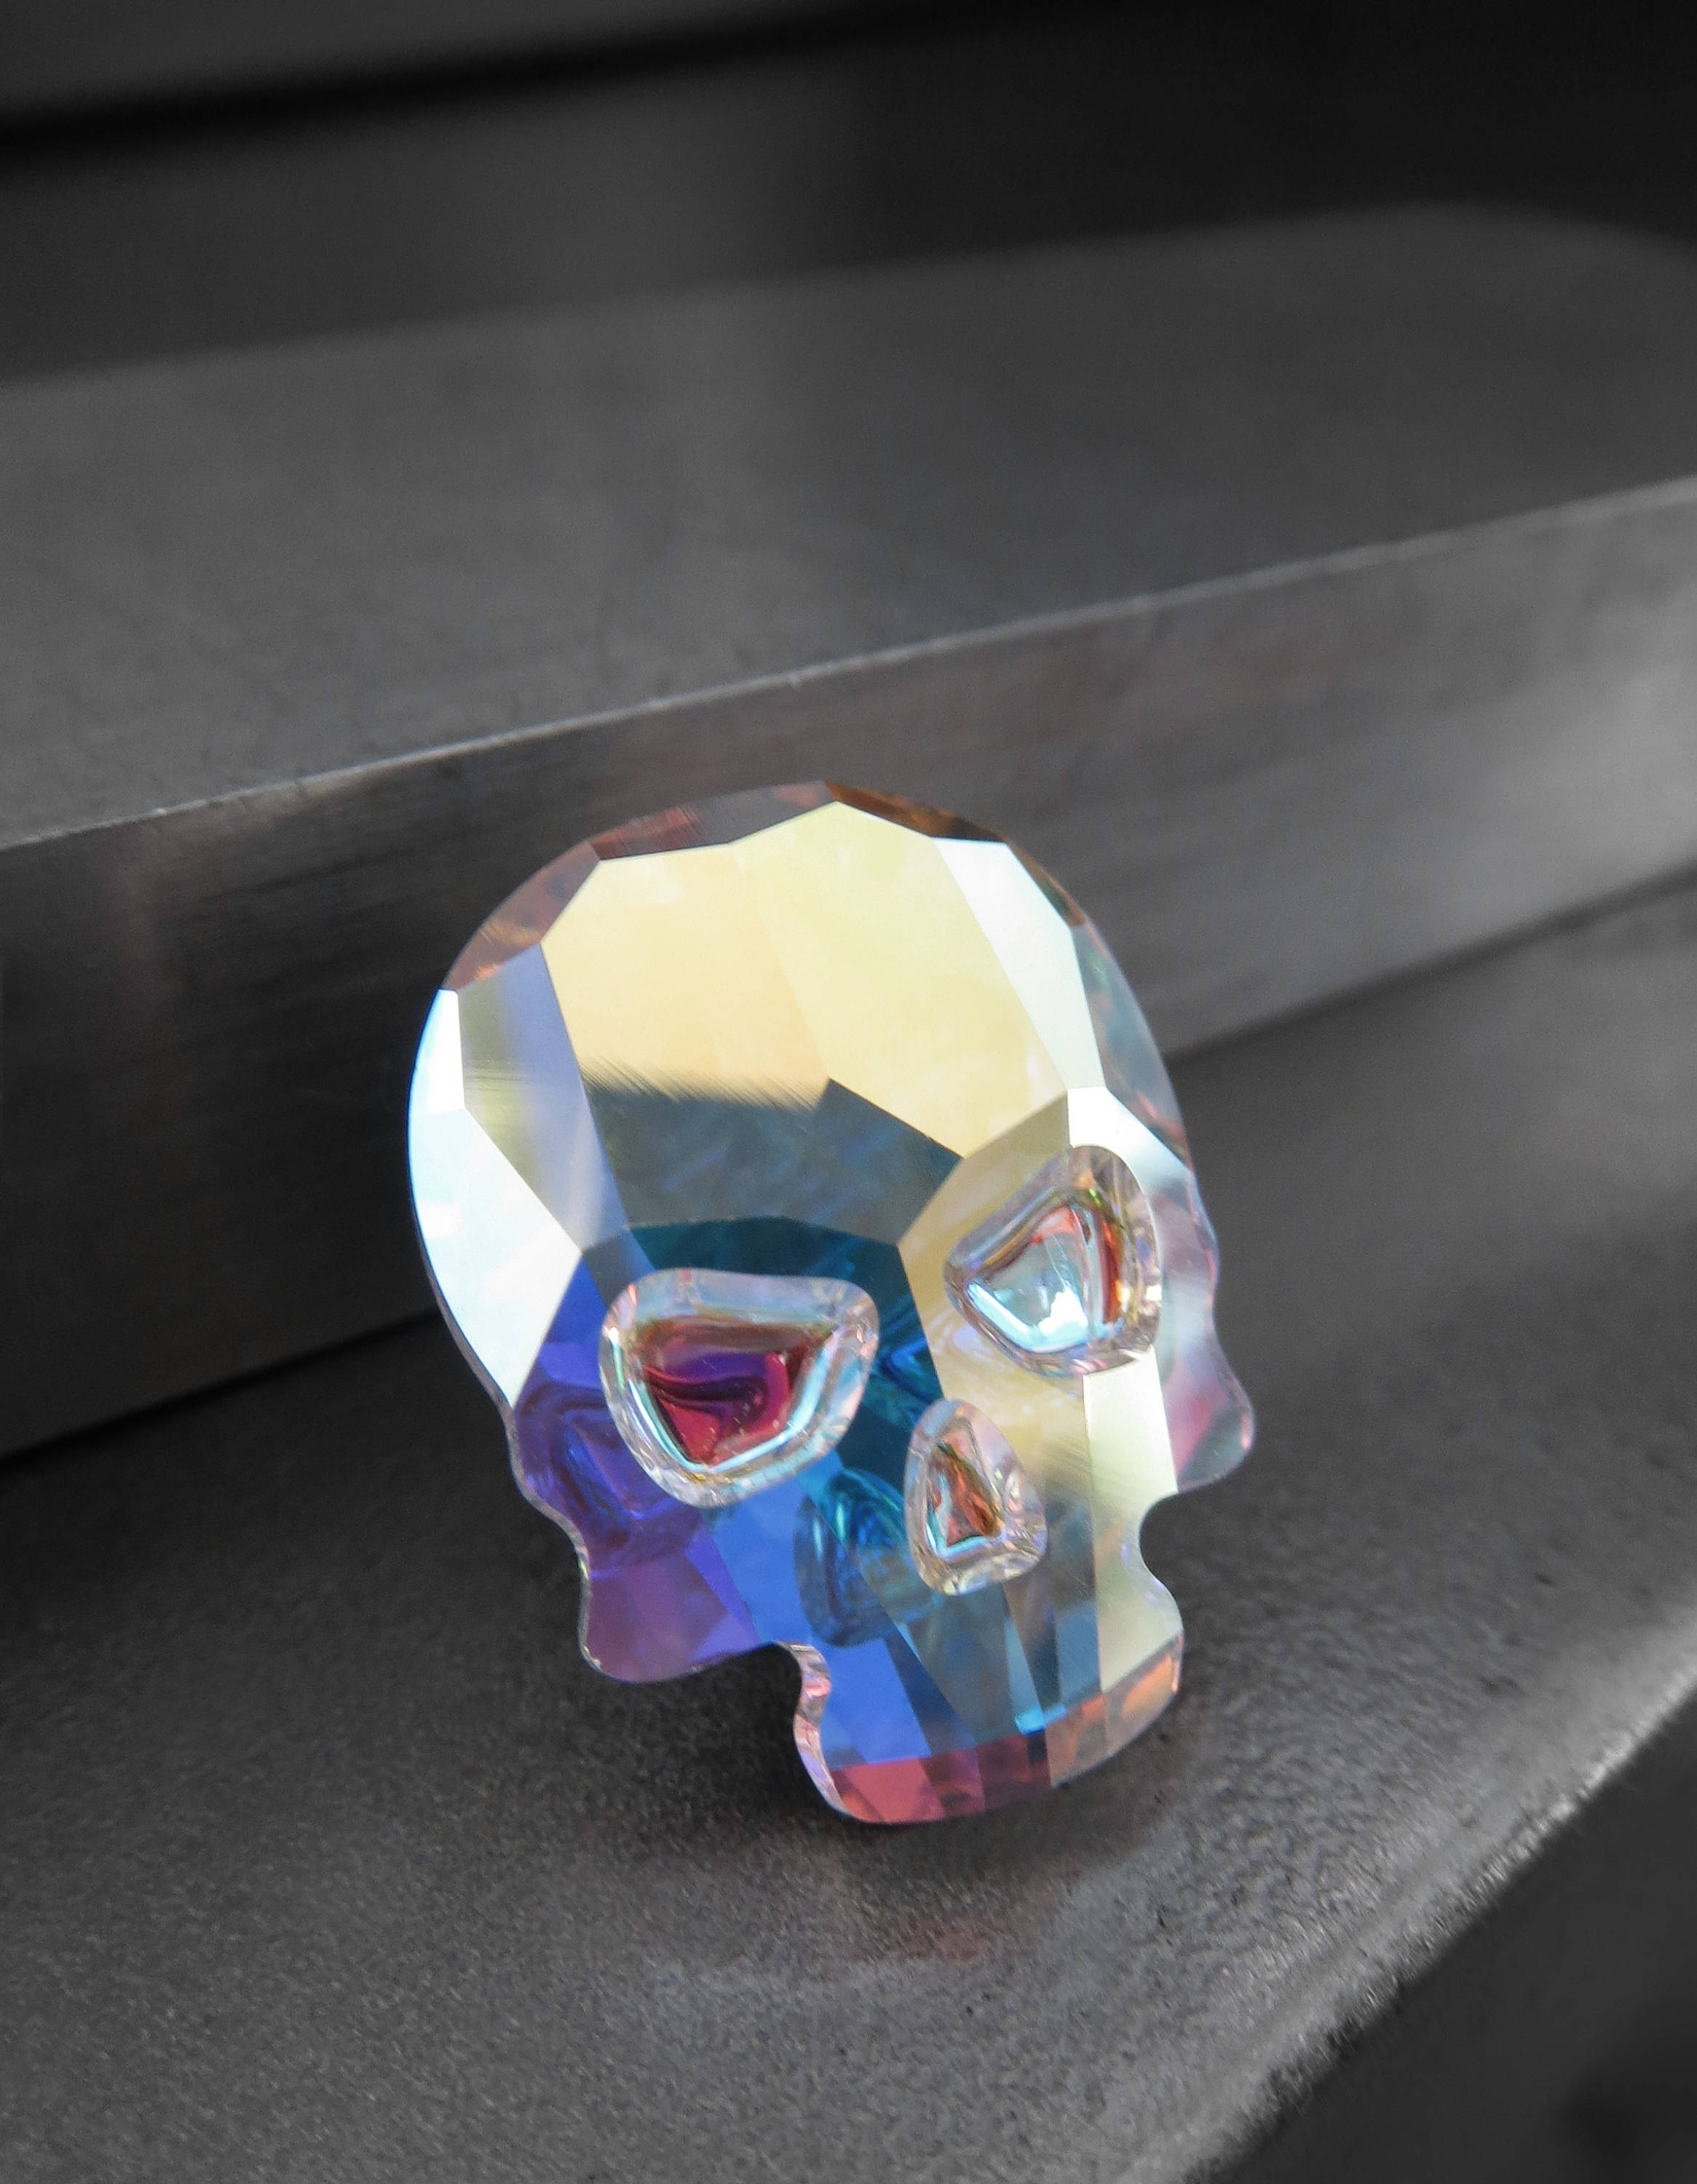 Small Sparkling Crystal Skull Pin or Magnet - Shimmer Iridescent AB